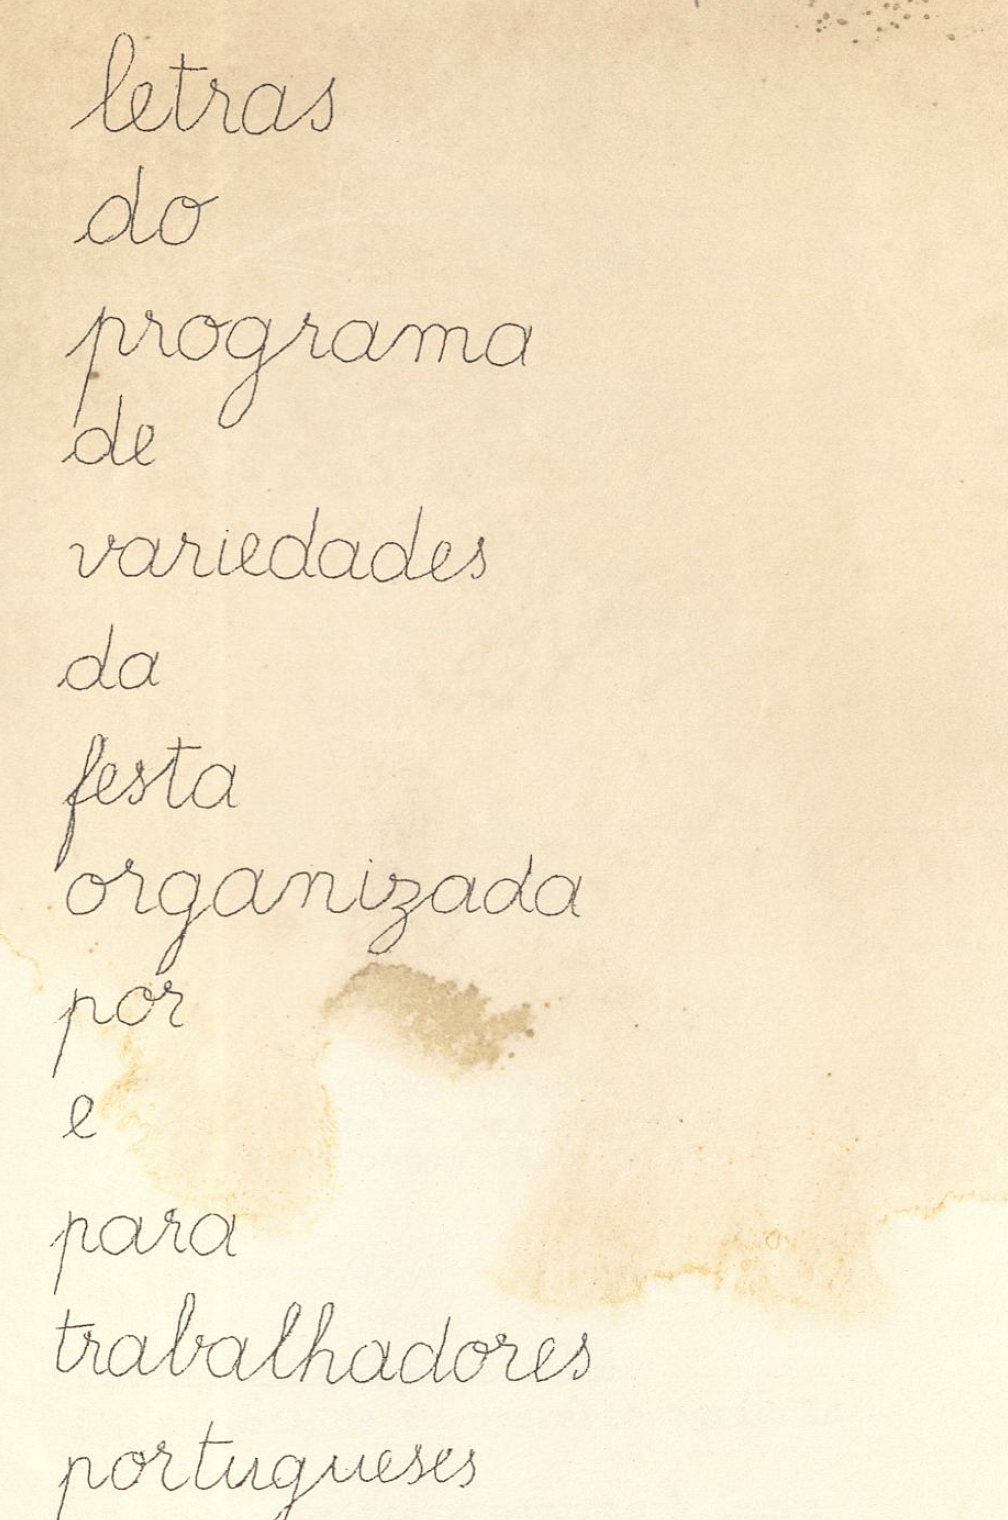 Letras do programa de variedades da festa organizada por e para trabalhadores portugueses (1967)